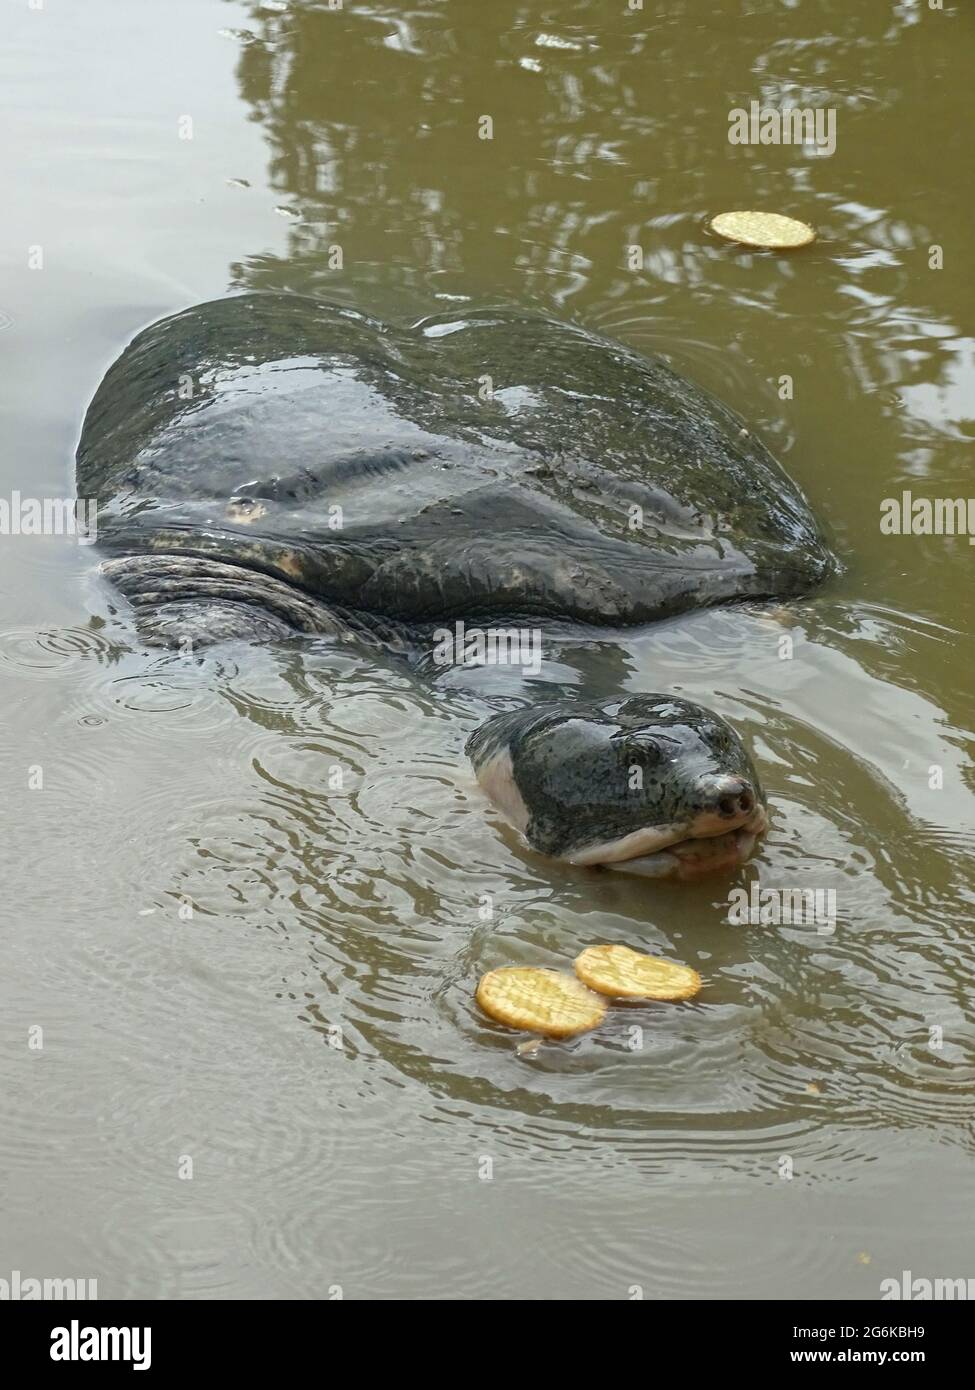 La tartaruga di softshell nera o tartaruga di Bostami, Nilssonia nigricans Assam, India. Tartaruga d'acqua dolce trovata in India (Assam) e Bangladesh Foto Stock